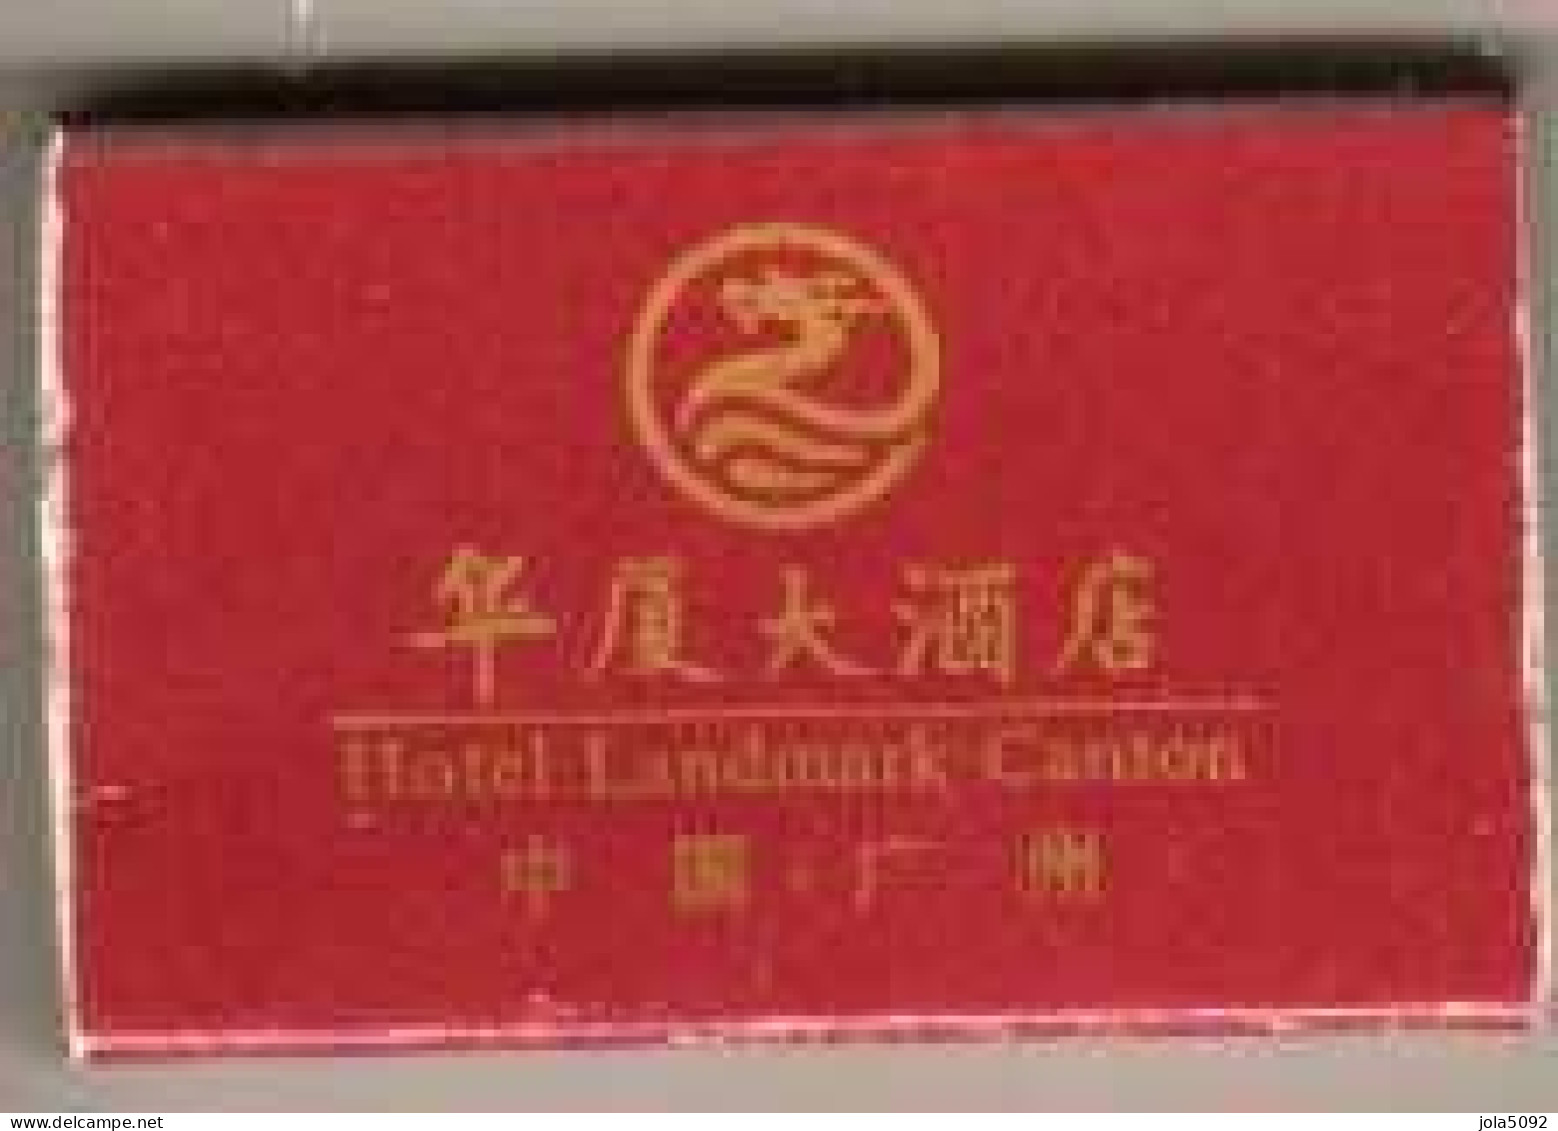 Boîte D'Allumettes - HOTEL LANDMARK - CANTON CHINE - Boites D'allumettes